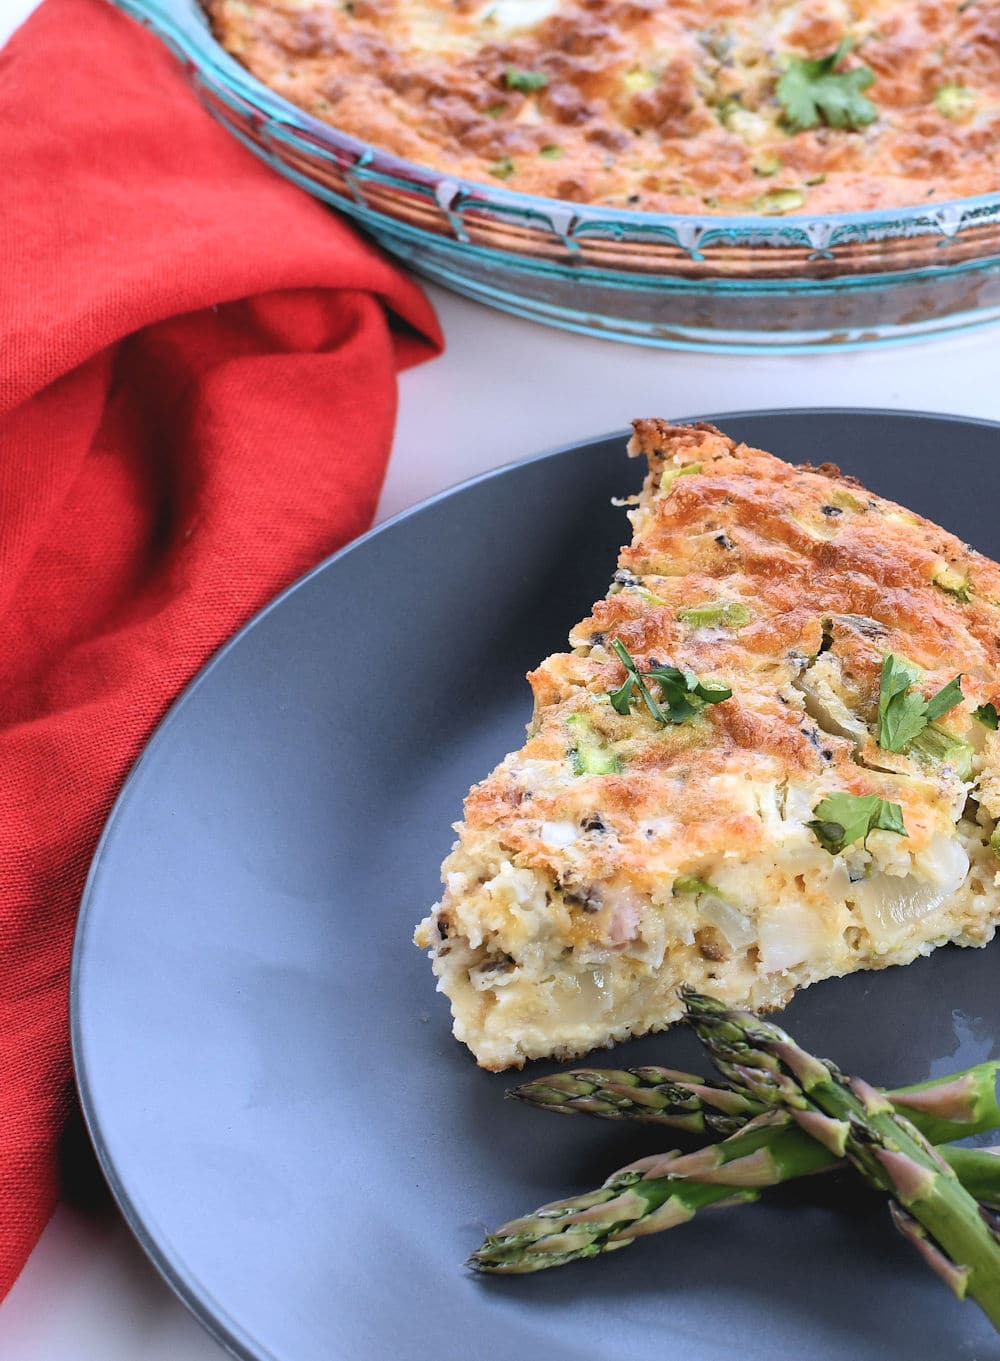 24 Bite: No Crust Easy Quiche Recipe: Ham and Asparagus by Christian Guzman